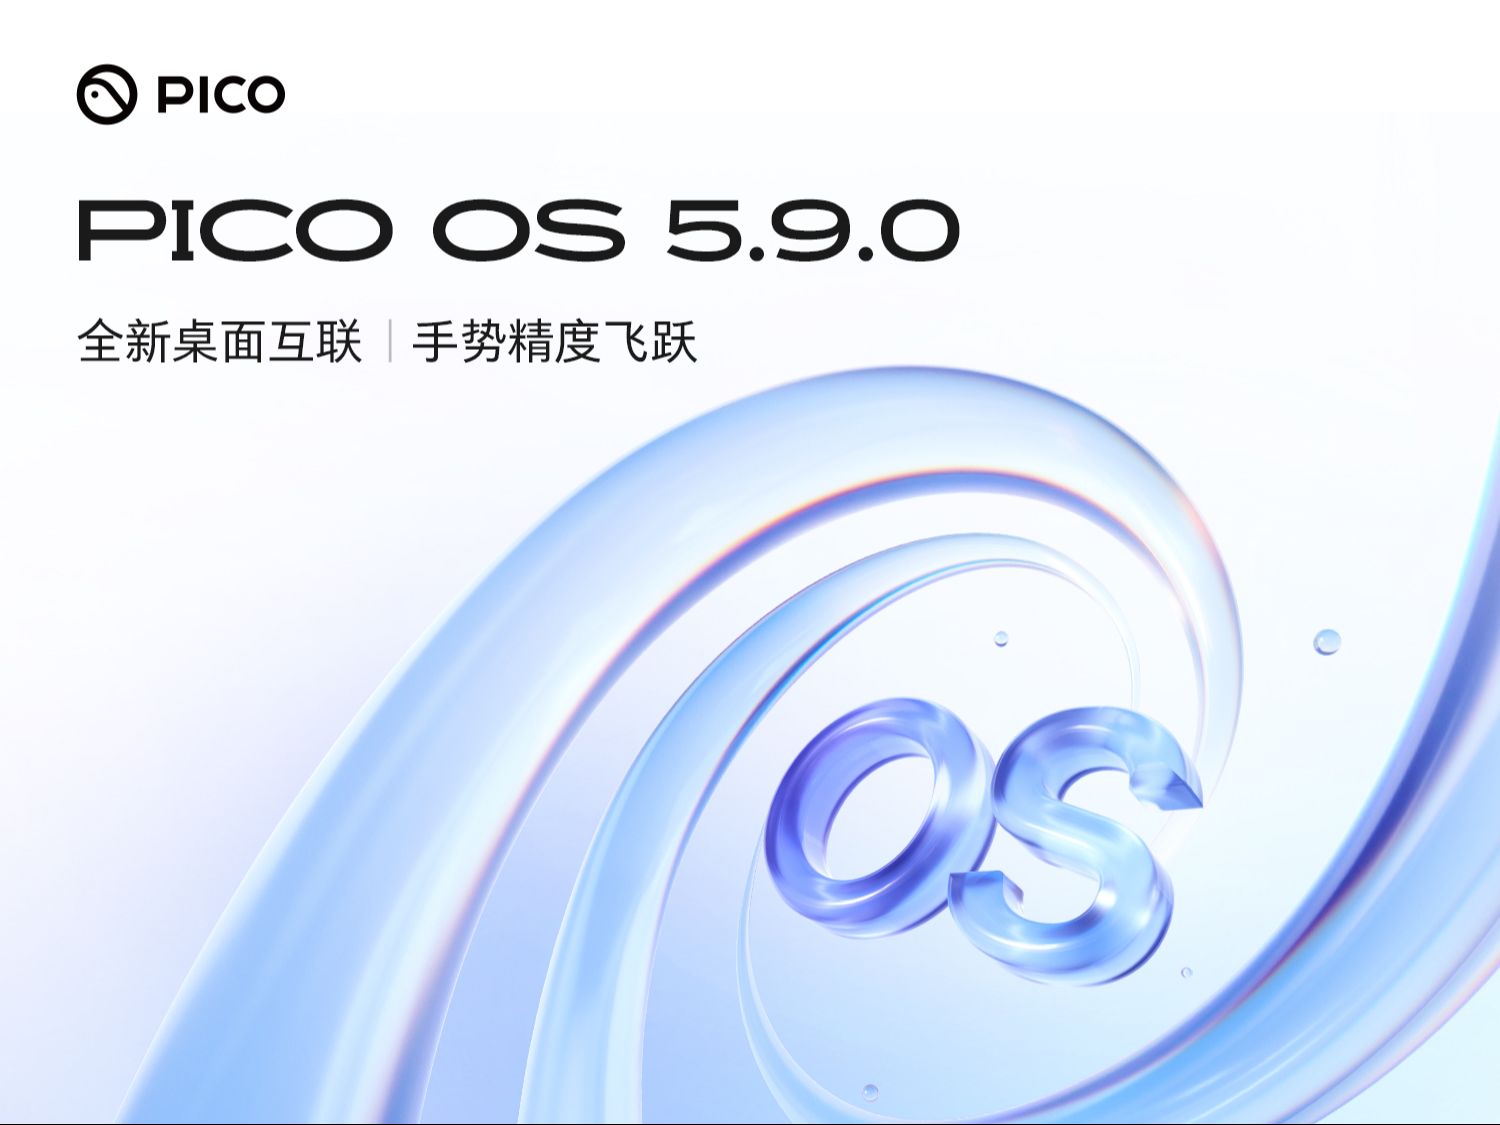 3分钟速览PICO OS 5.9.0 更新亮点